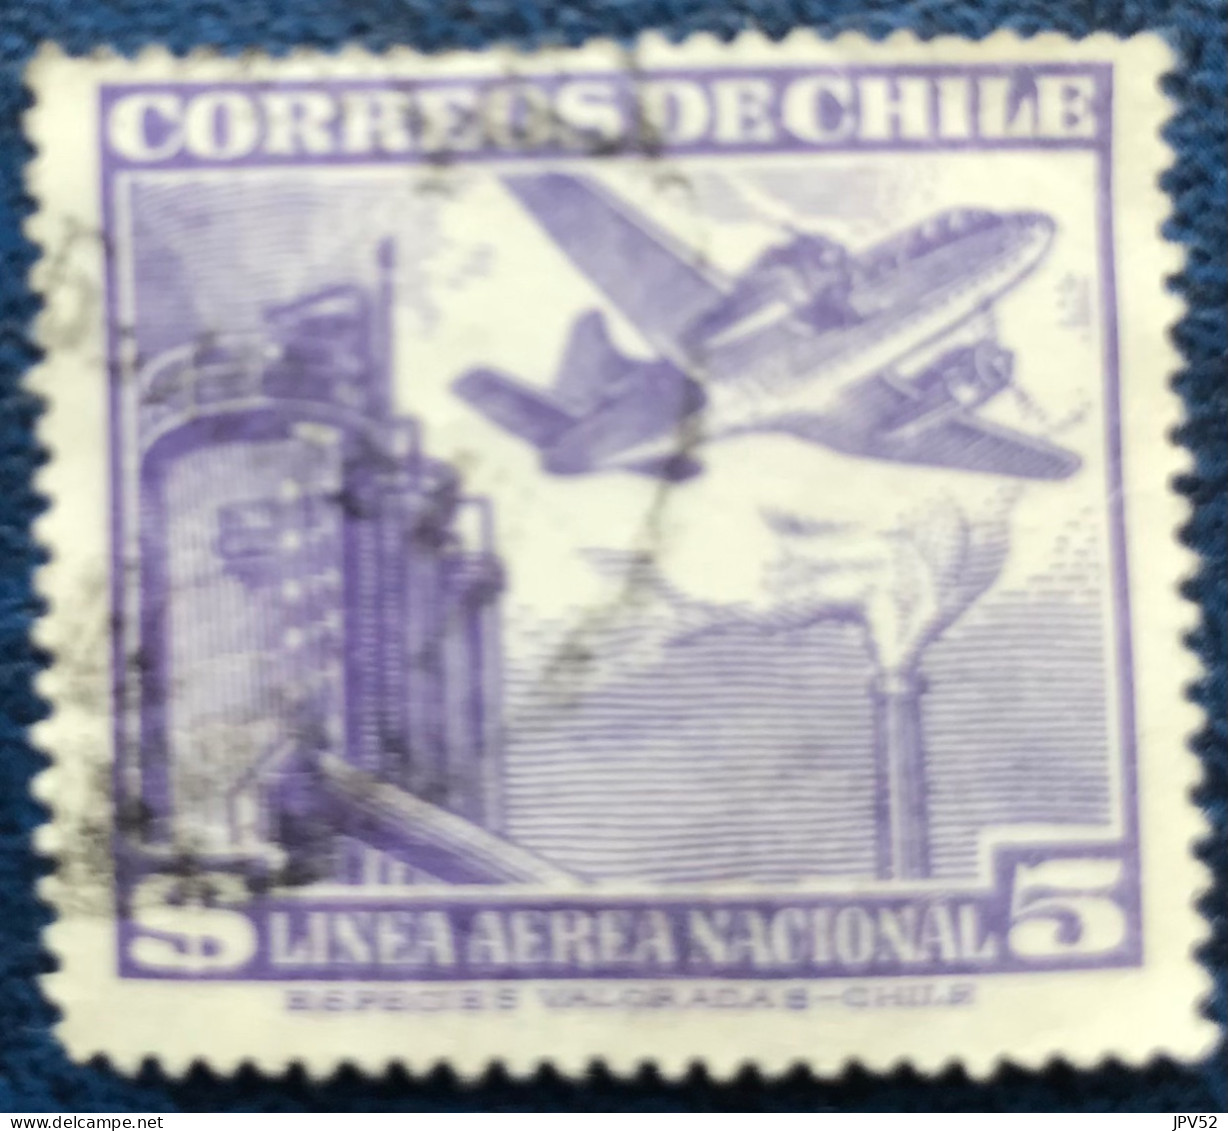 Chile - Chili - C14/20 - 1951 - (°)used - Michel 486 - Vliegtuig Boven Fabriek - Chili